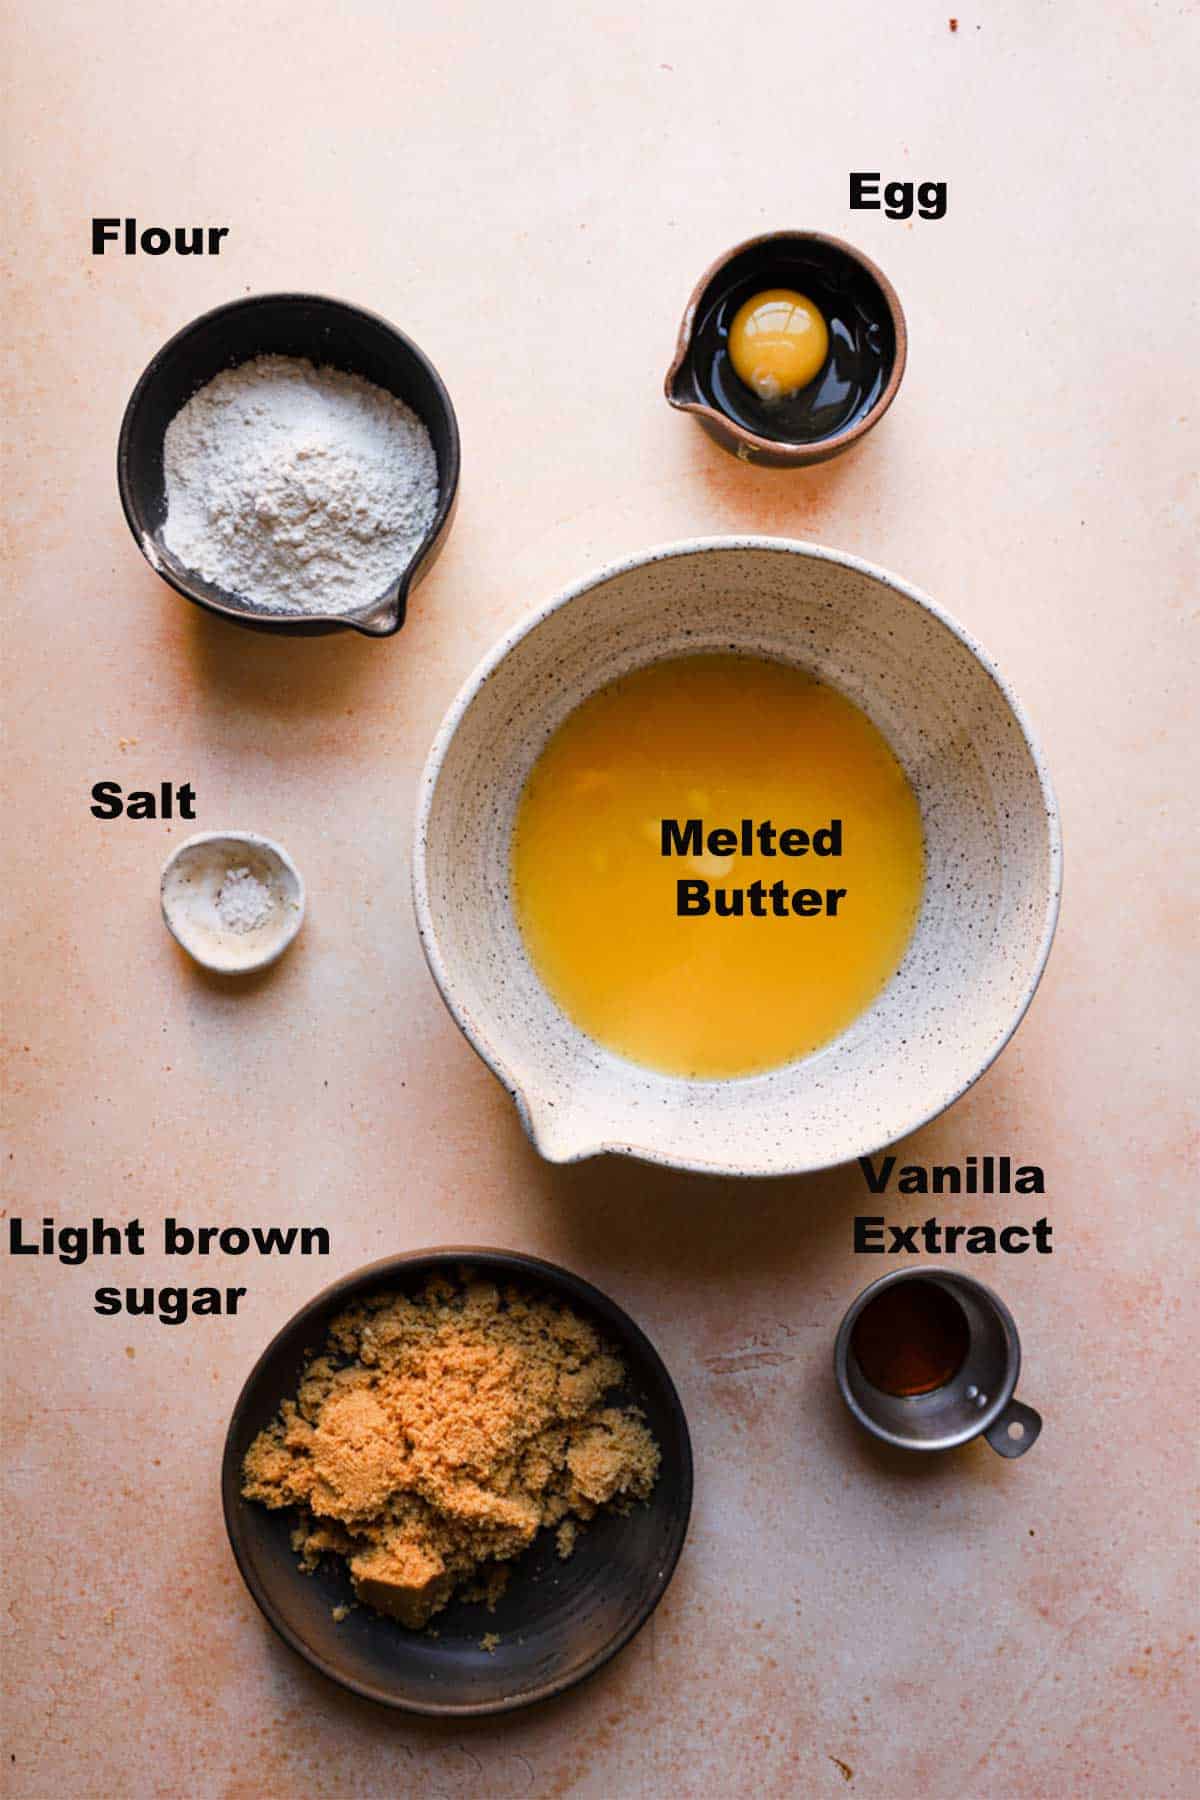 Ingredients for making blondie batter